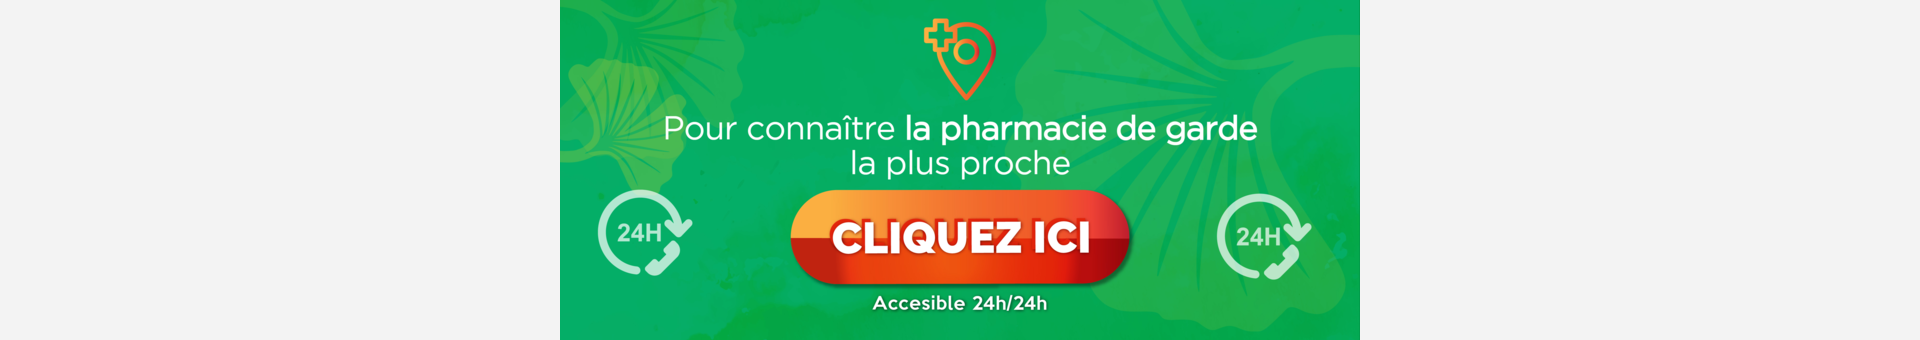 Pharmacie de Croze - Parapharmacie Coffret Tisanes & Thés